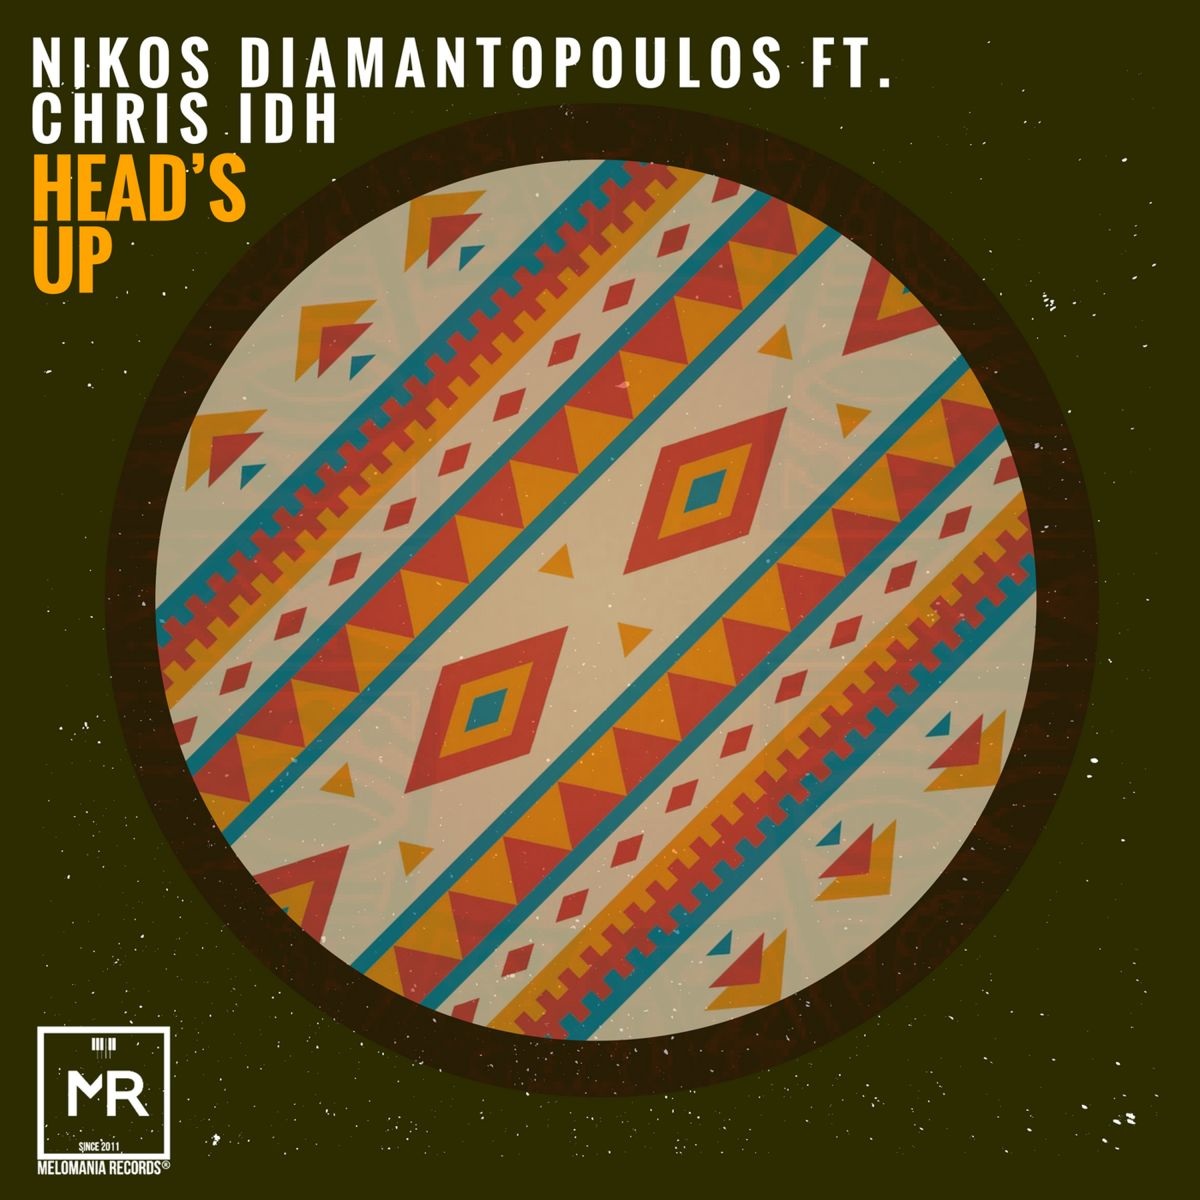 Nikos Diamantopoulos ft Chris IDH - Head's Up / Melomania Records